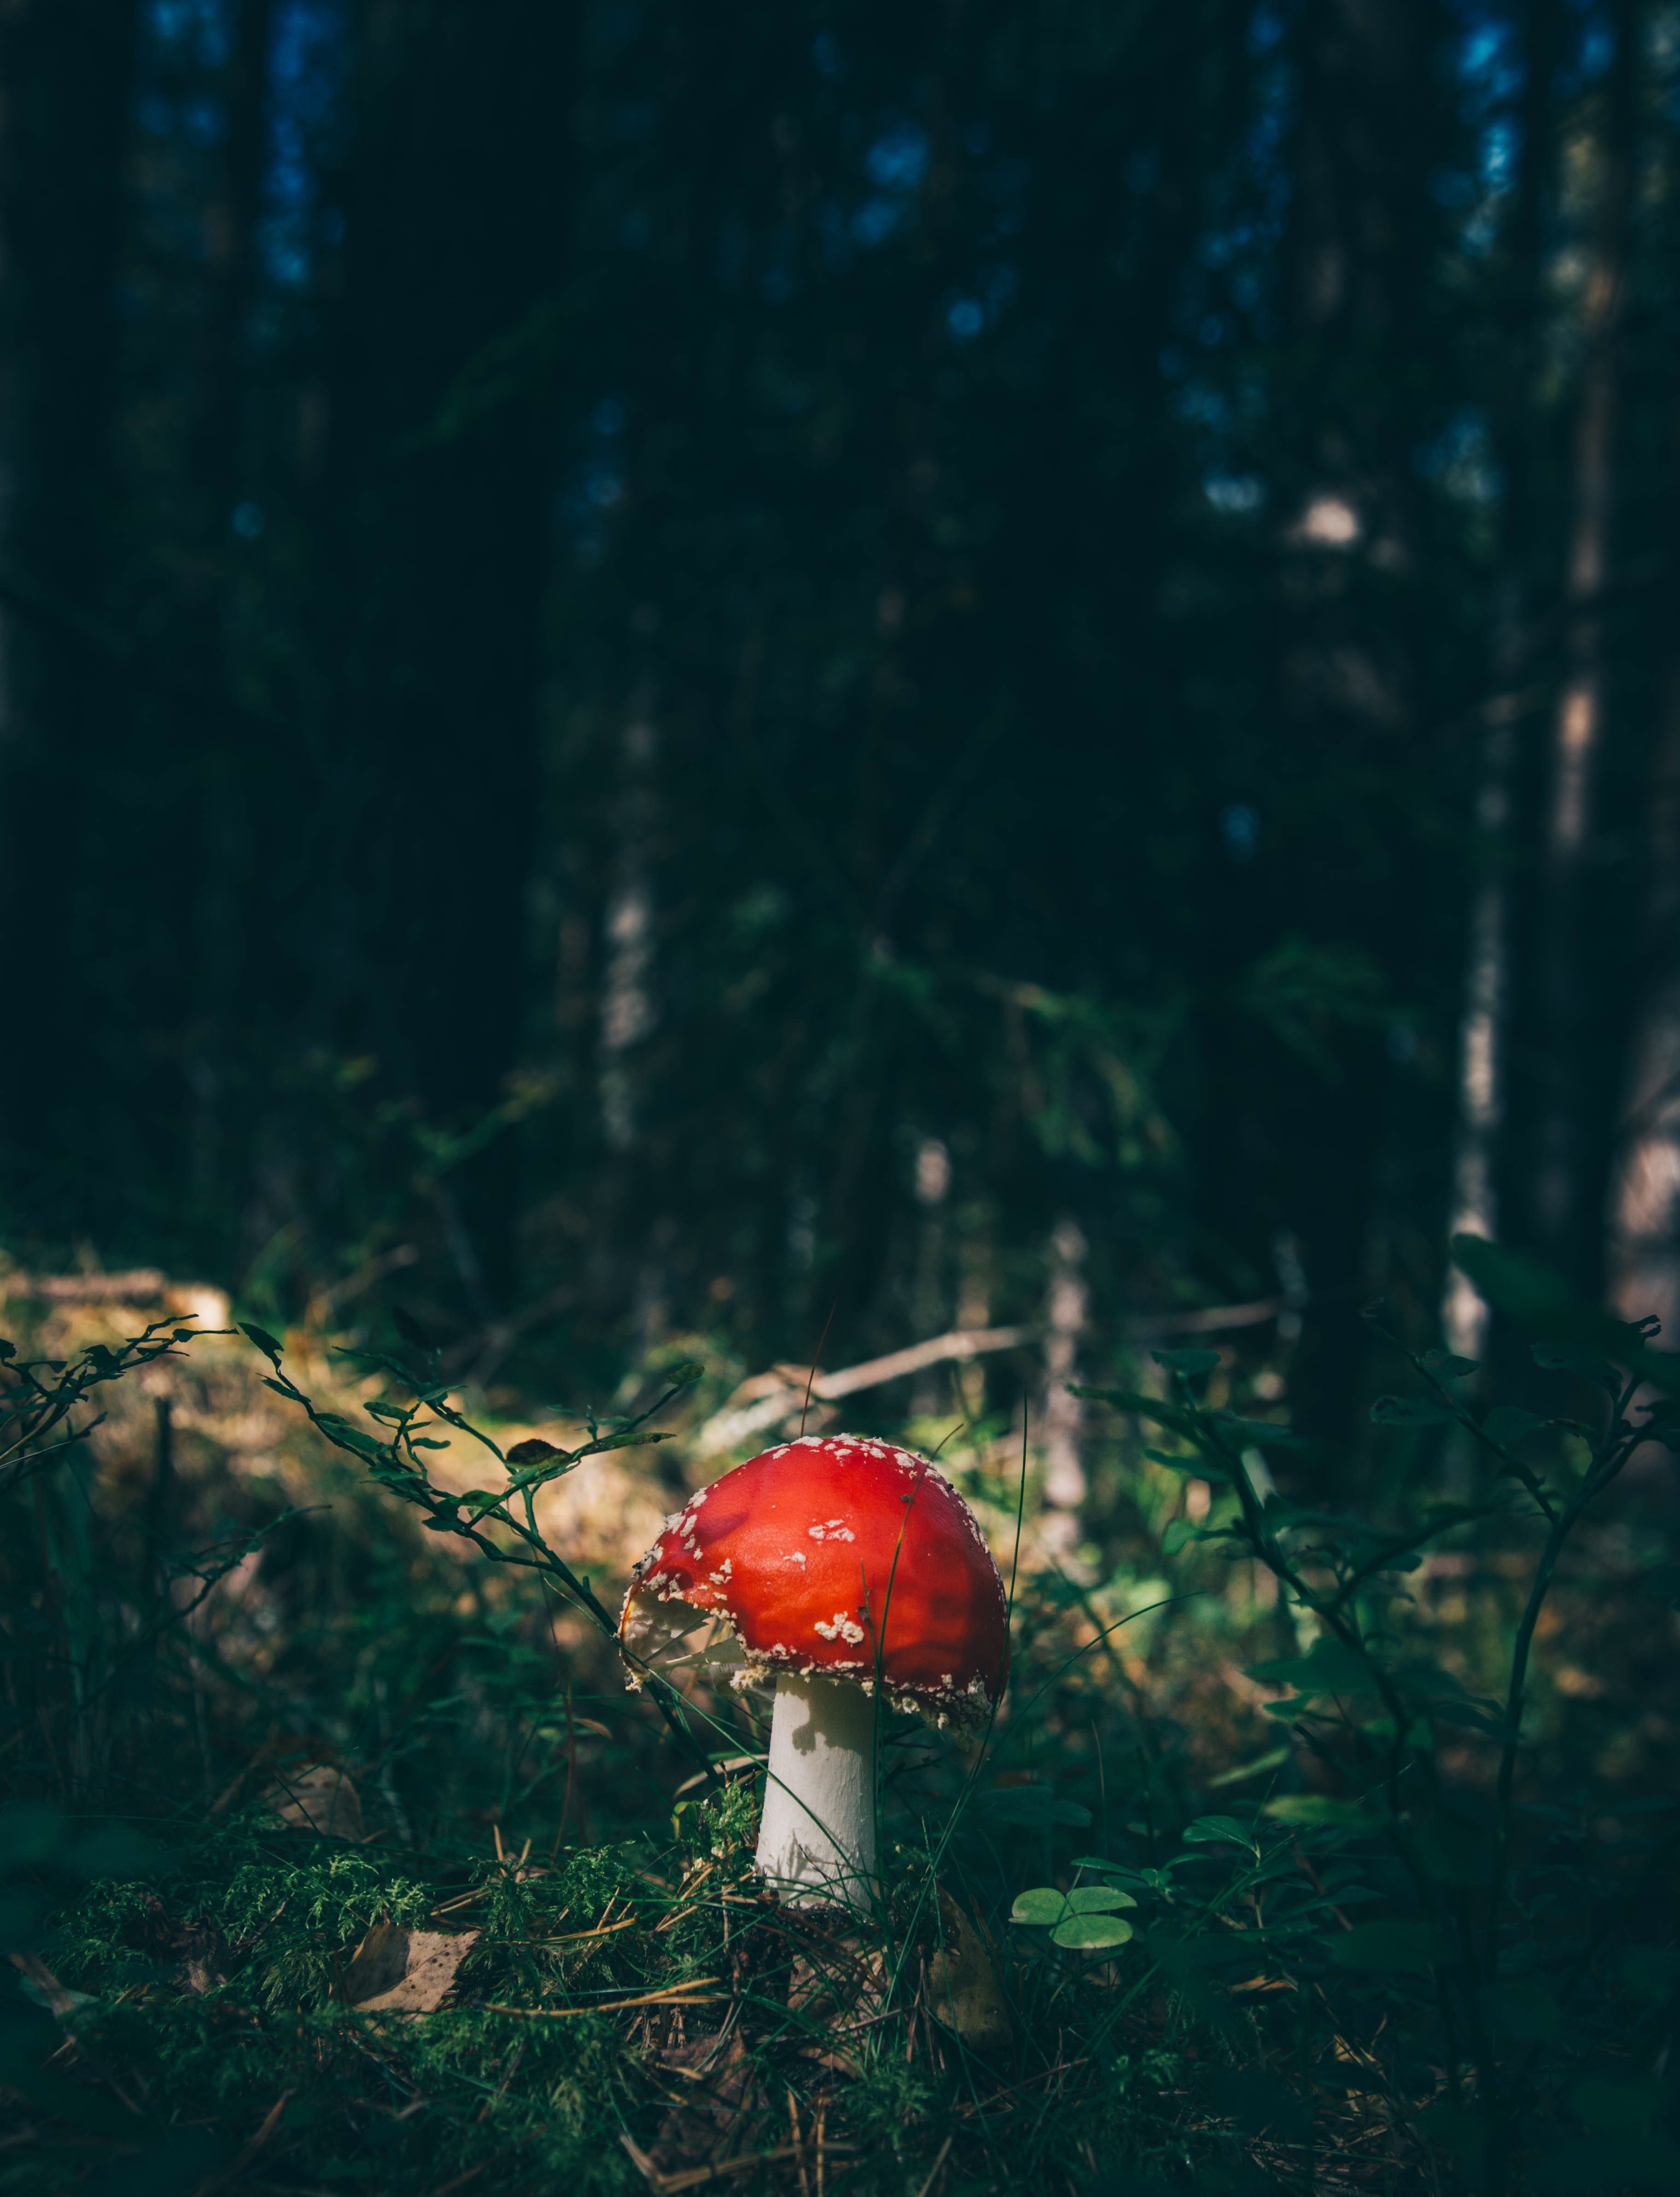 Mushroom Spots Images  Free Download on Freepik